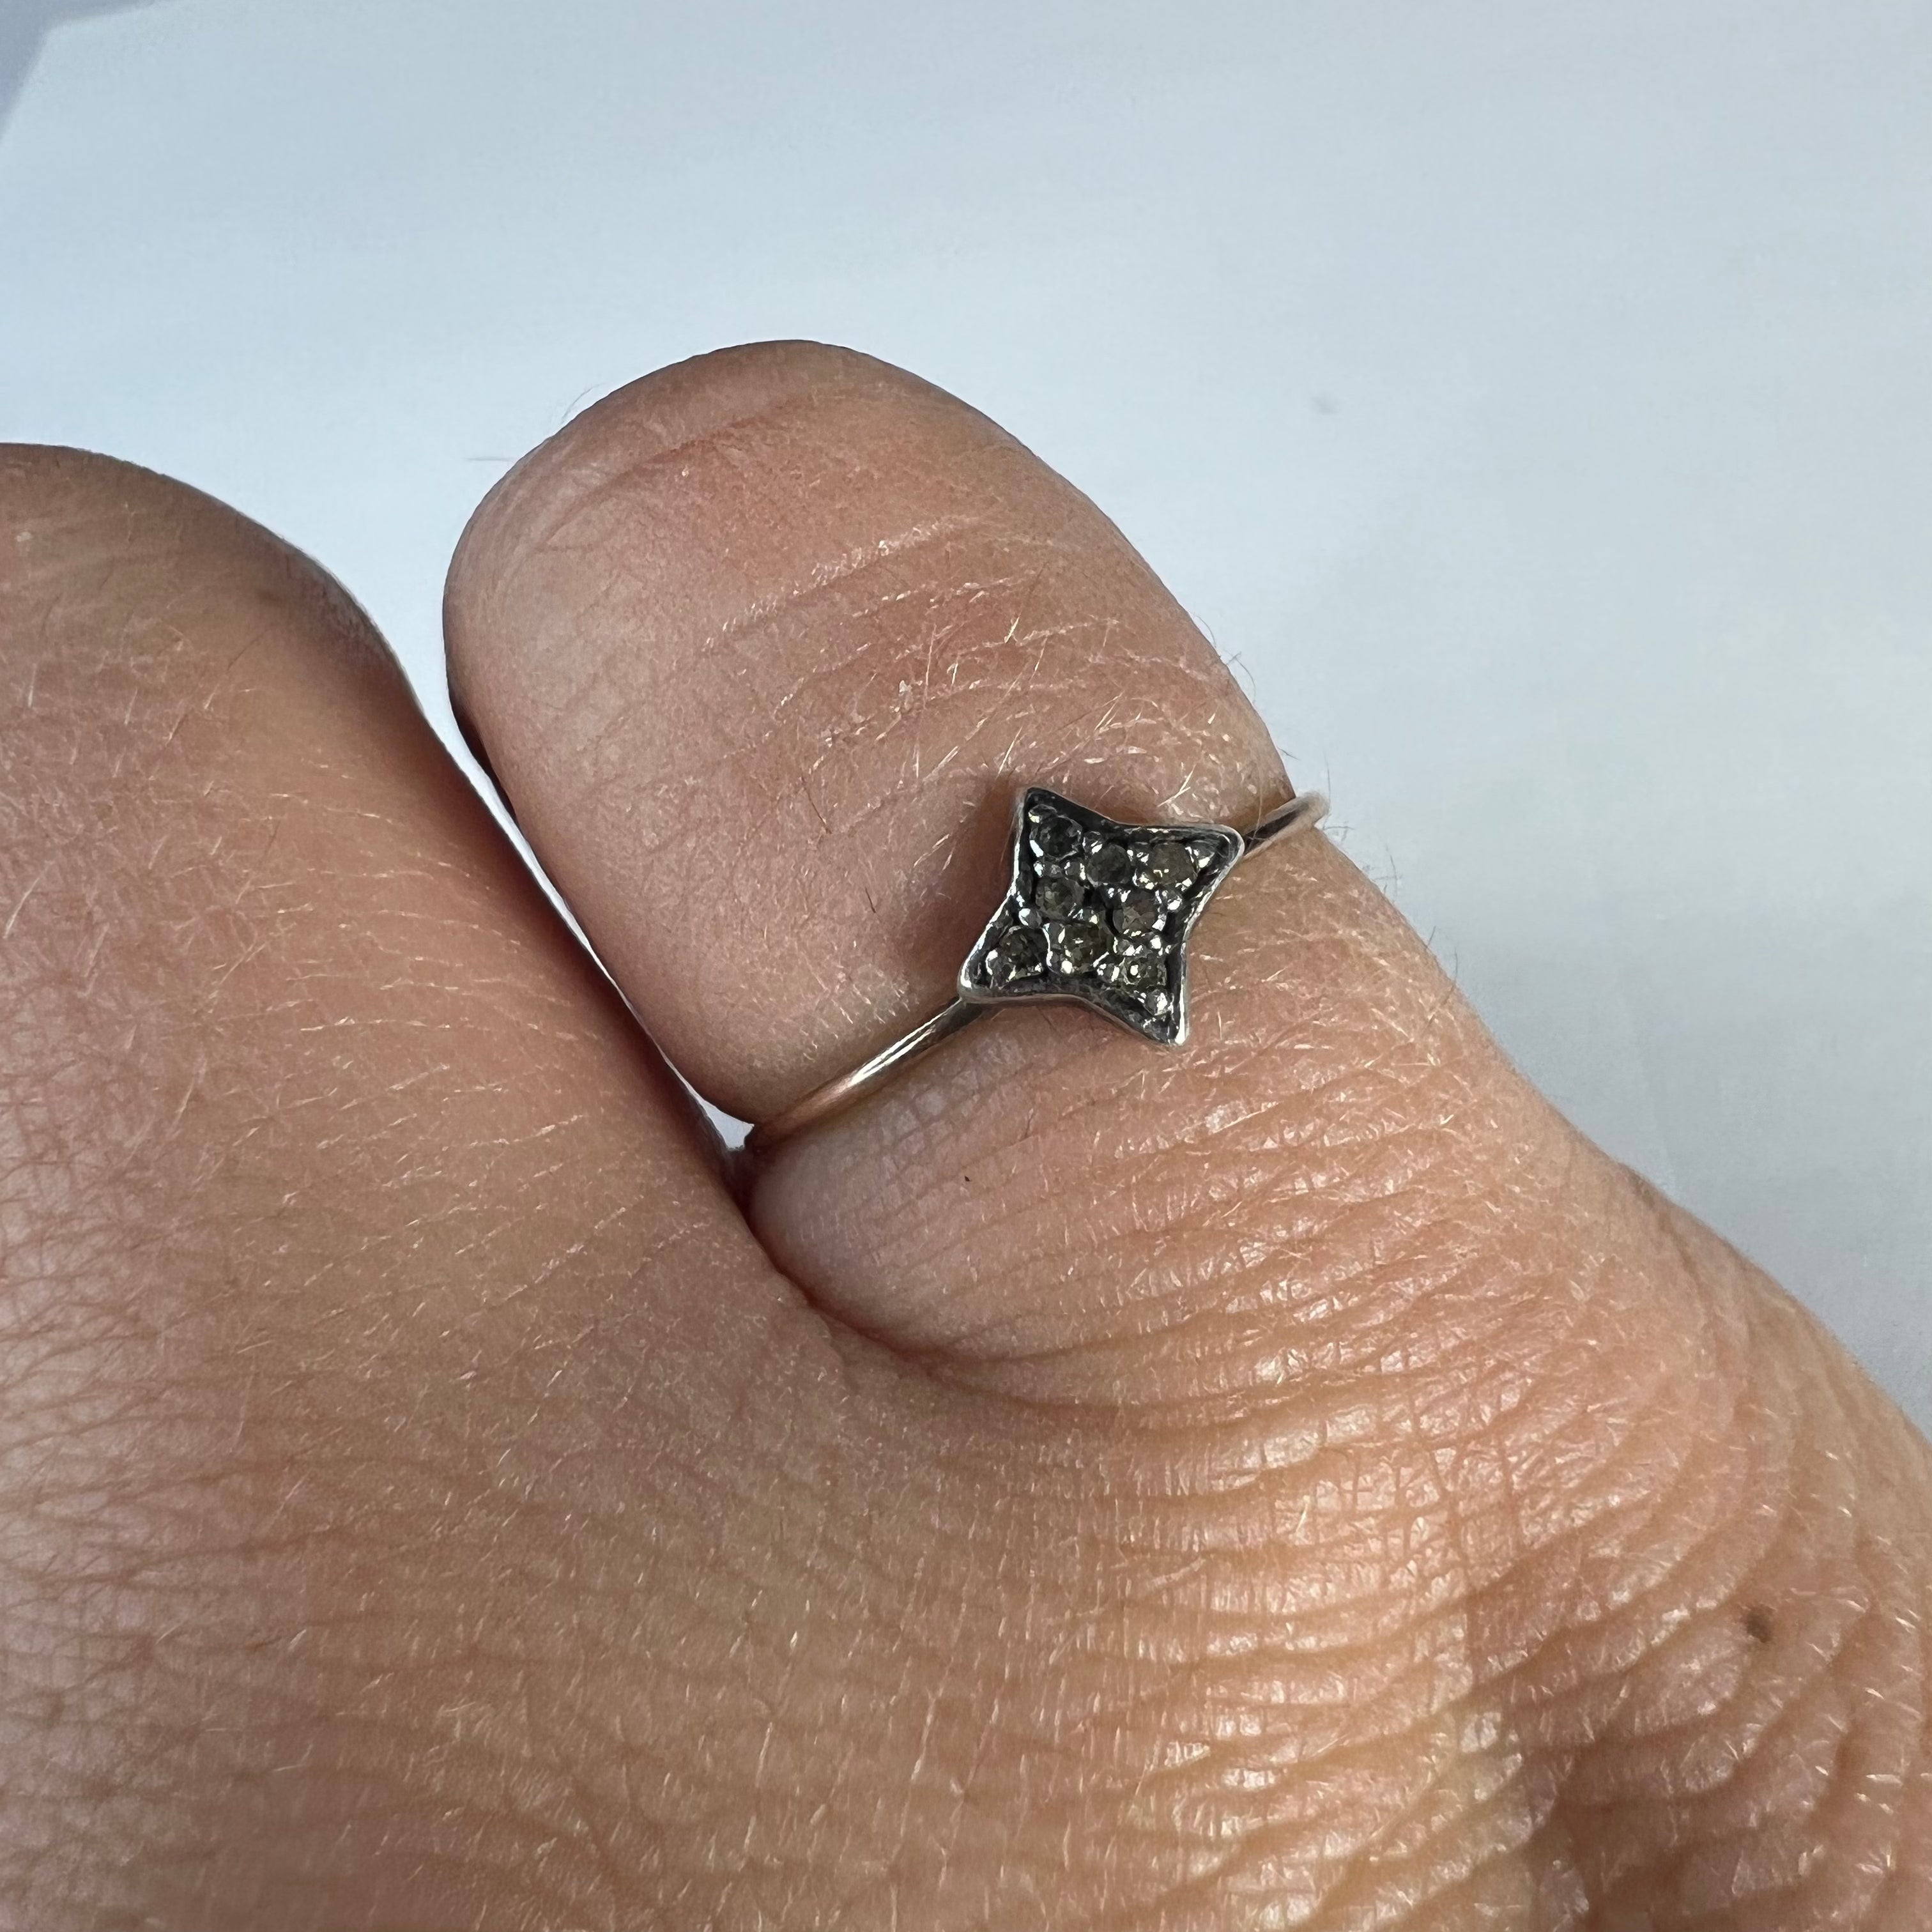 Antique 14K Rose Gold Rose cut Diamonds Star Dainty Ring Size 5.25